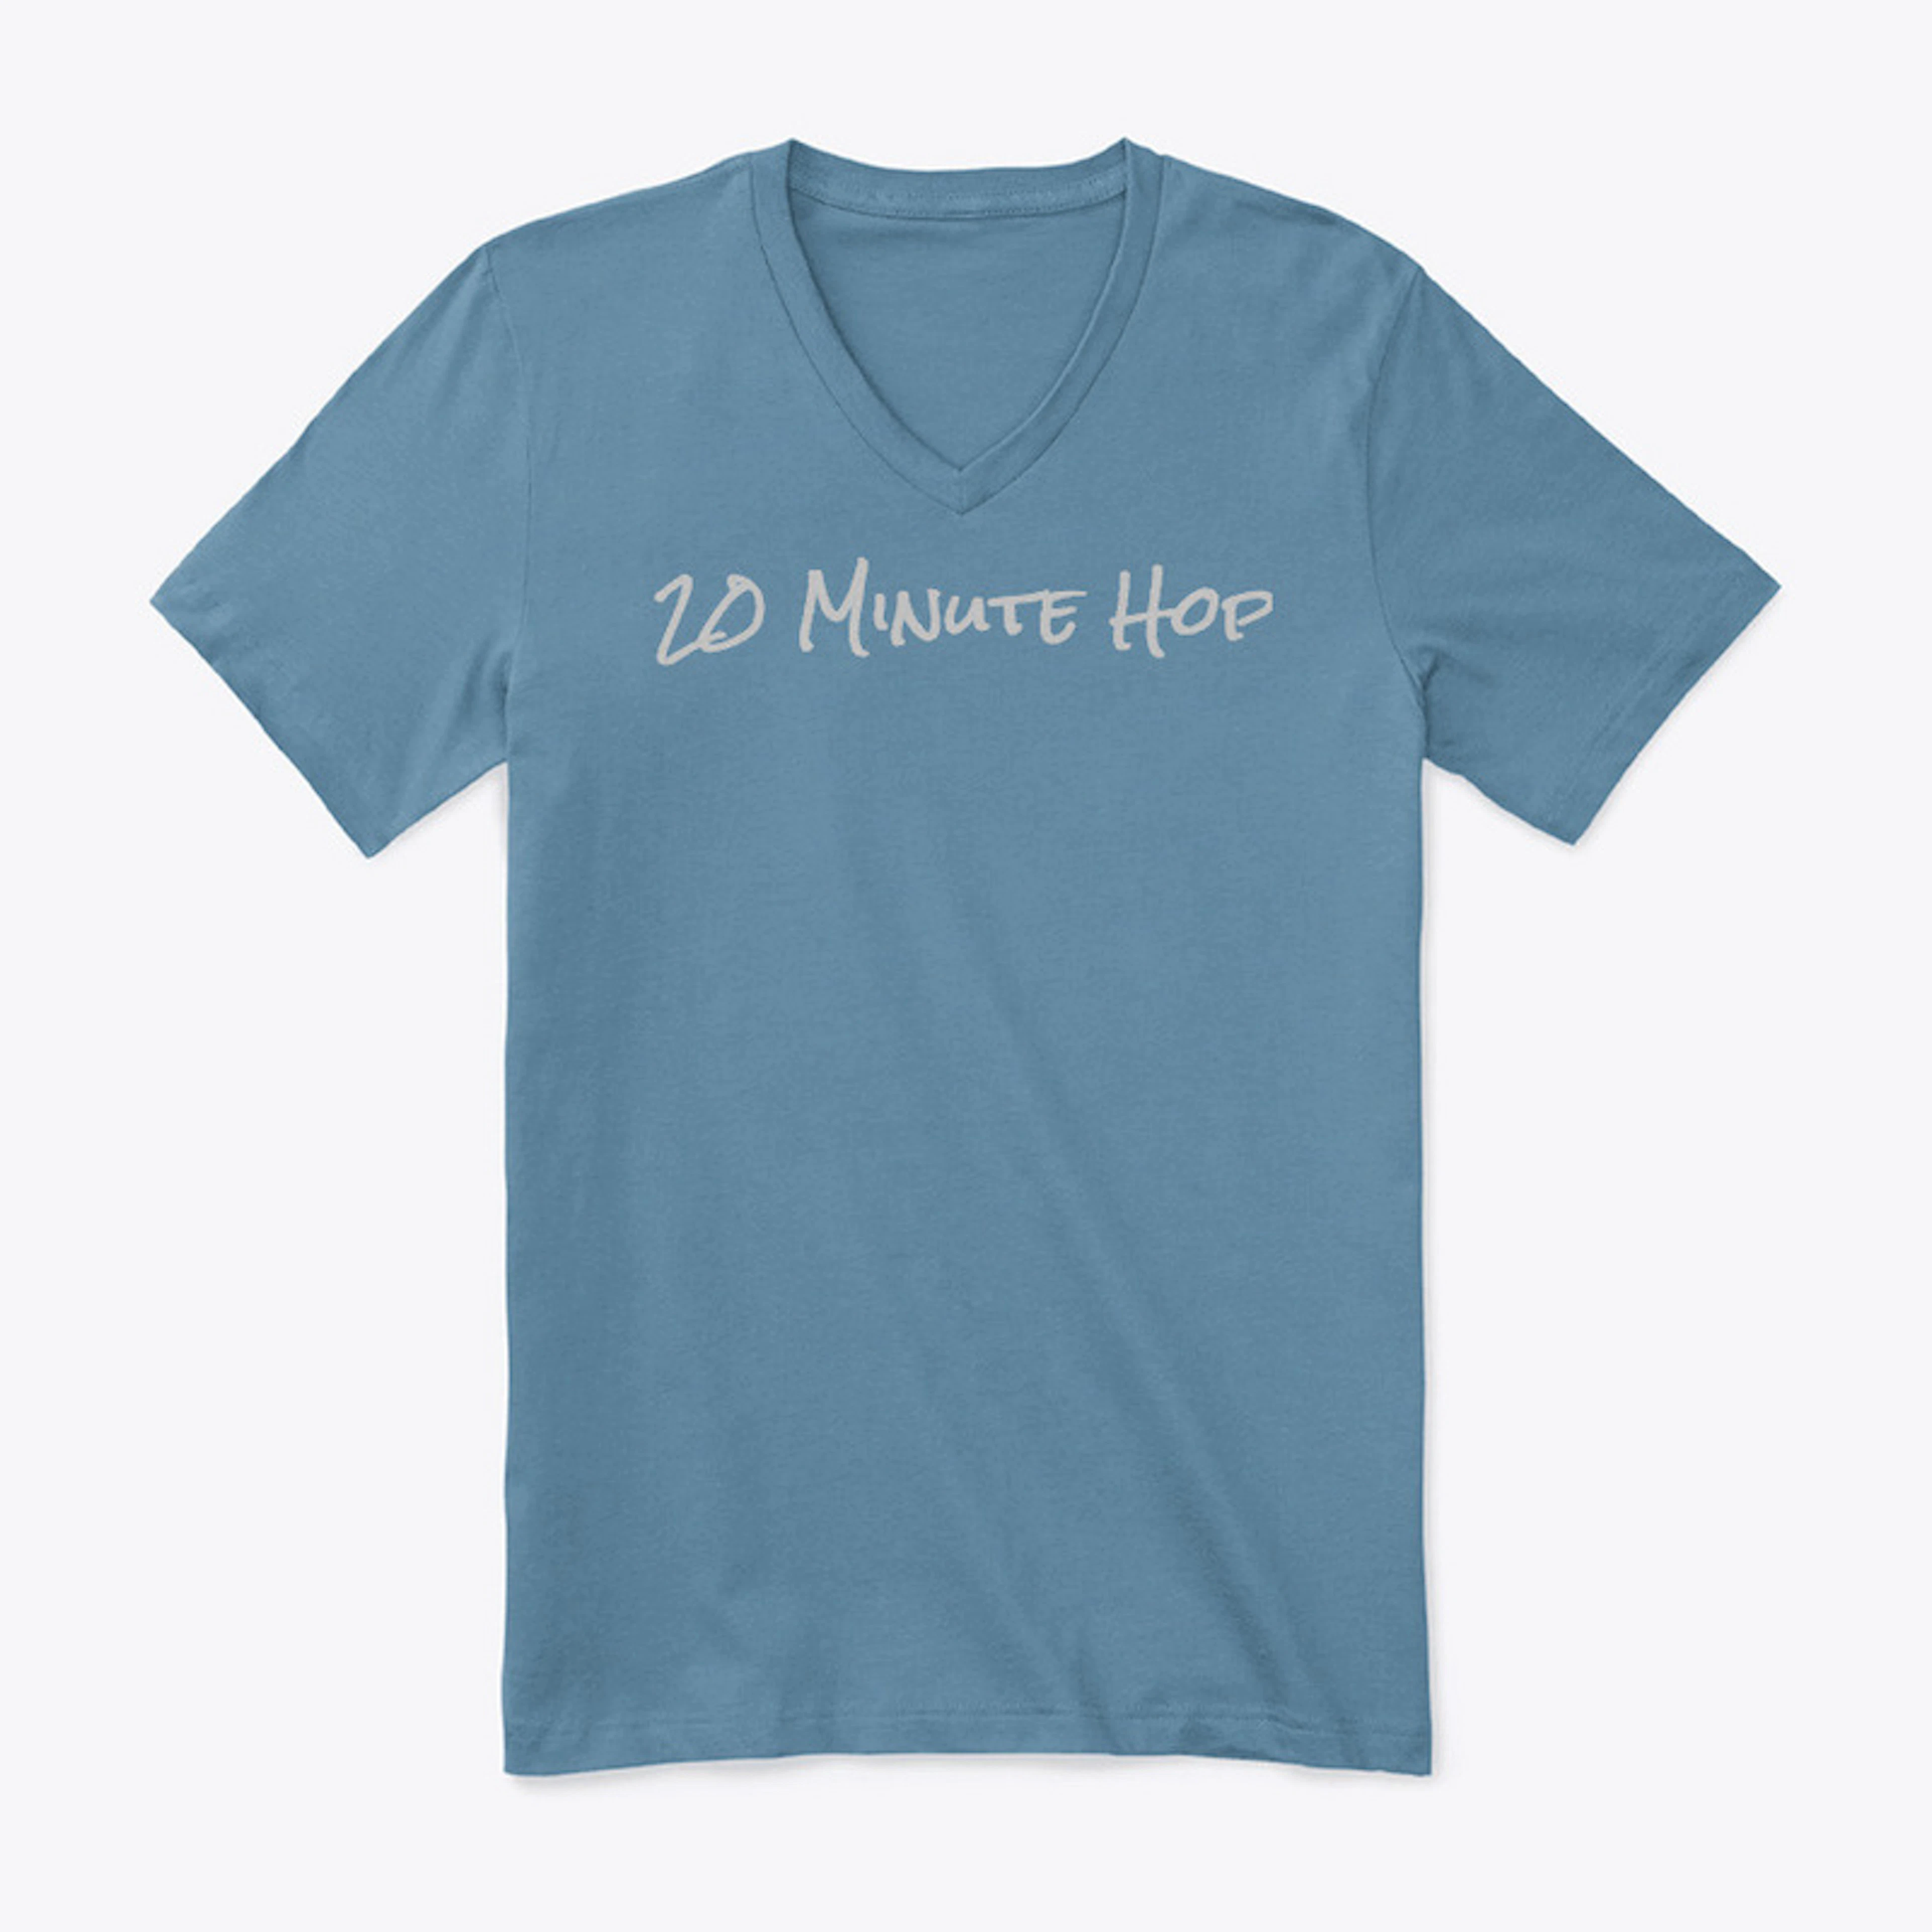 20 Minute Hop